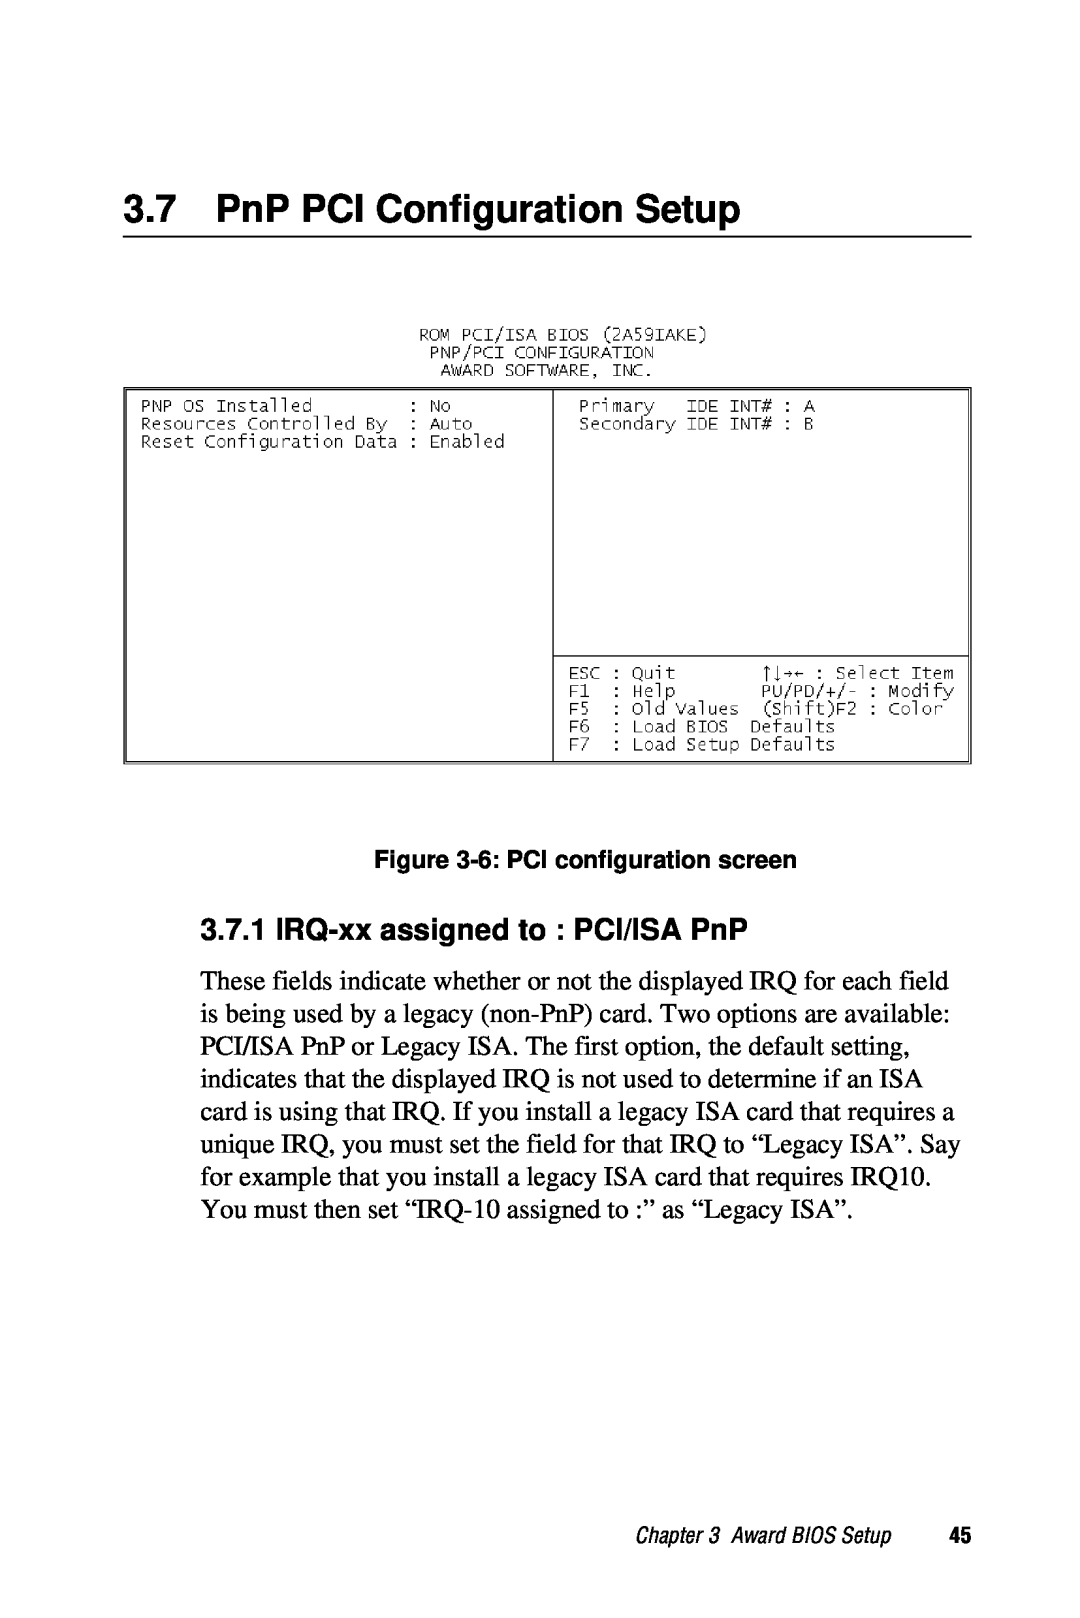 Advantech PCA-6359 user manual PnP PCI Configuration Setup, IRQ-xx assigned to PCI/ISA PnP 